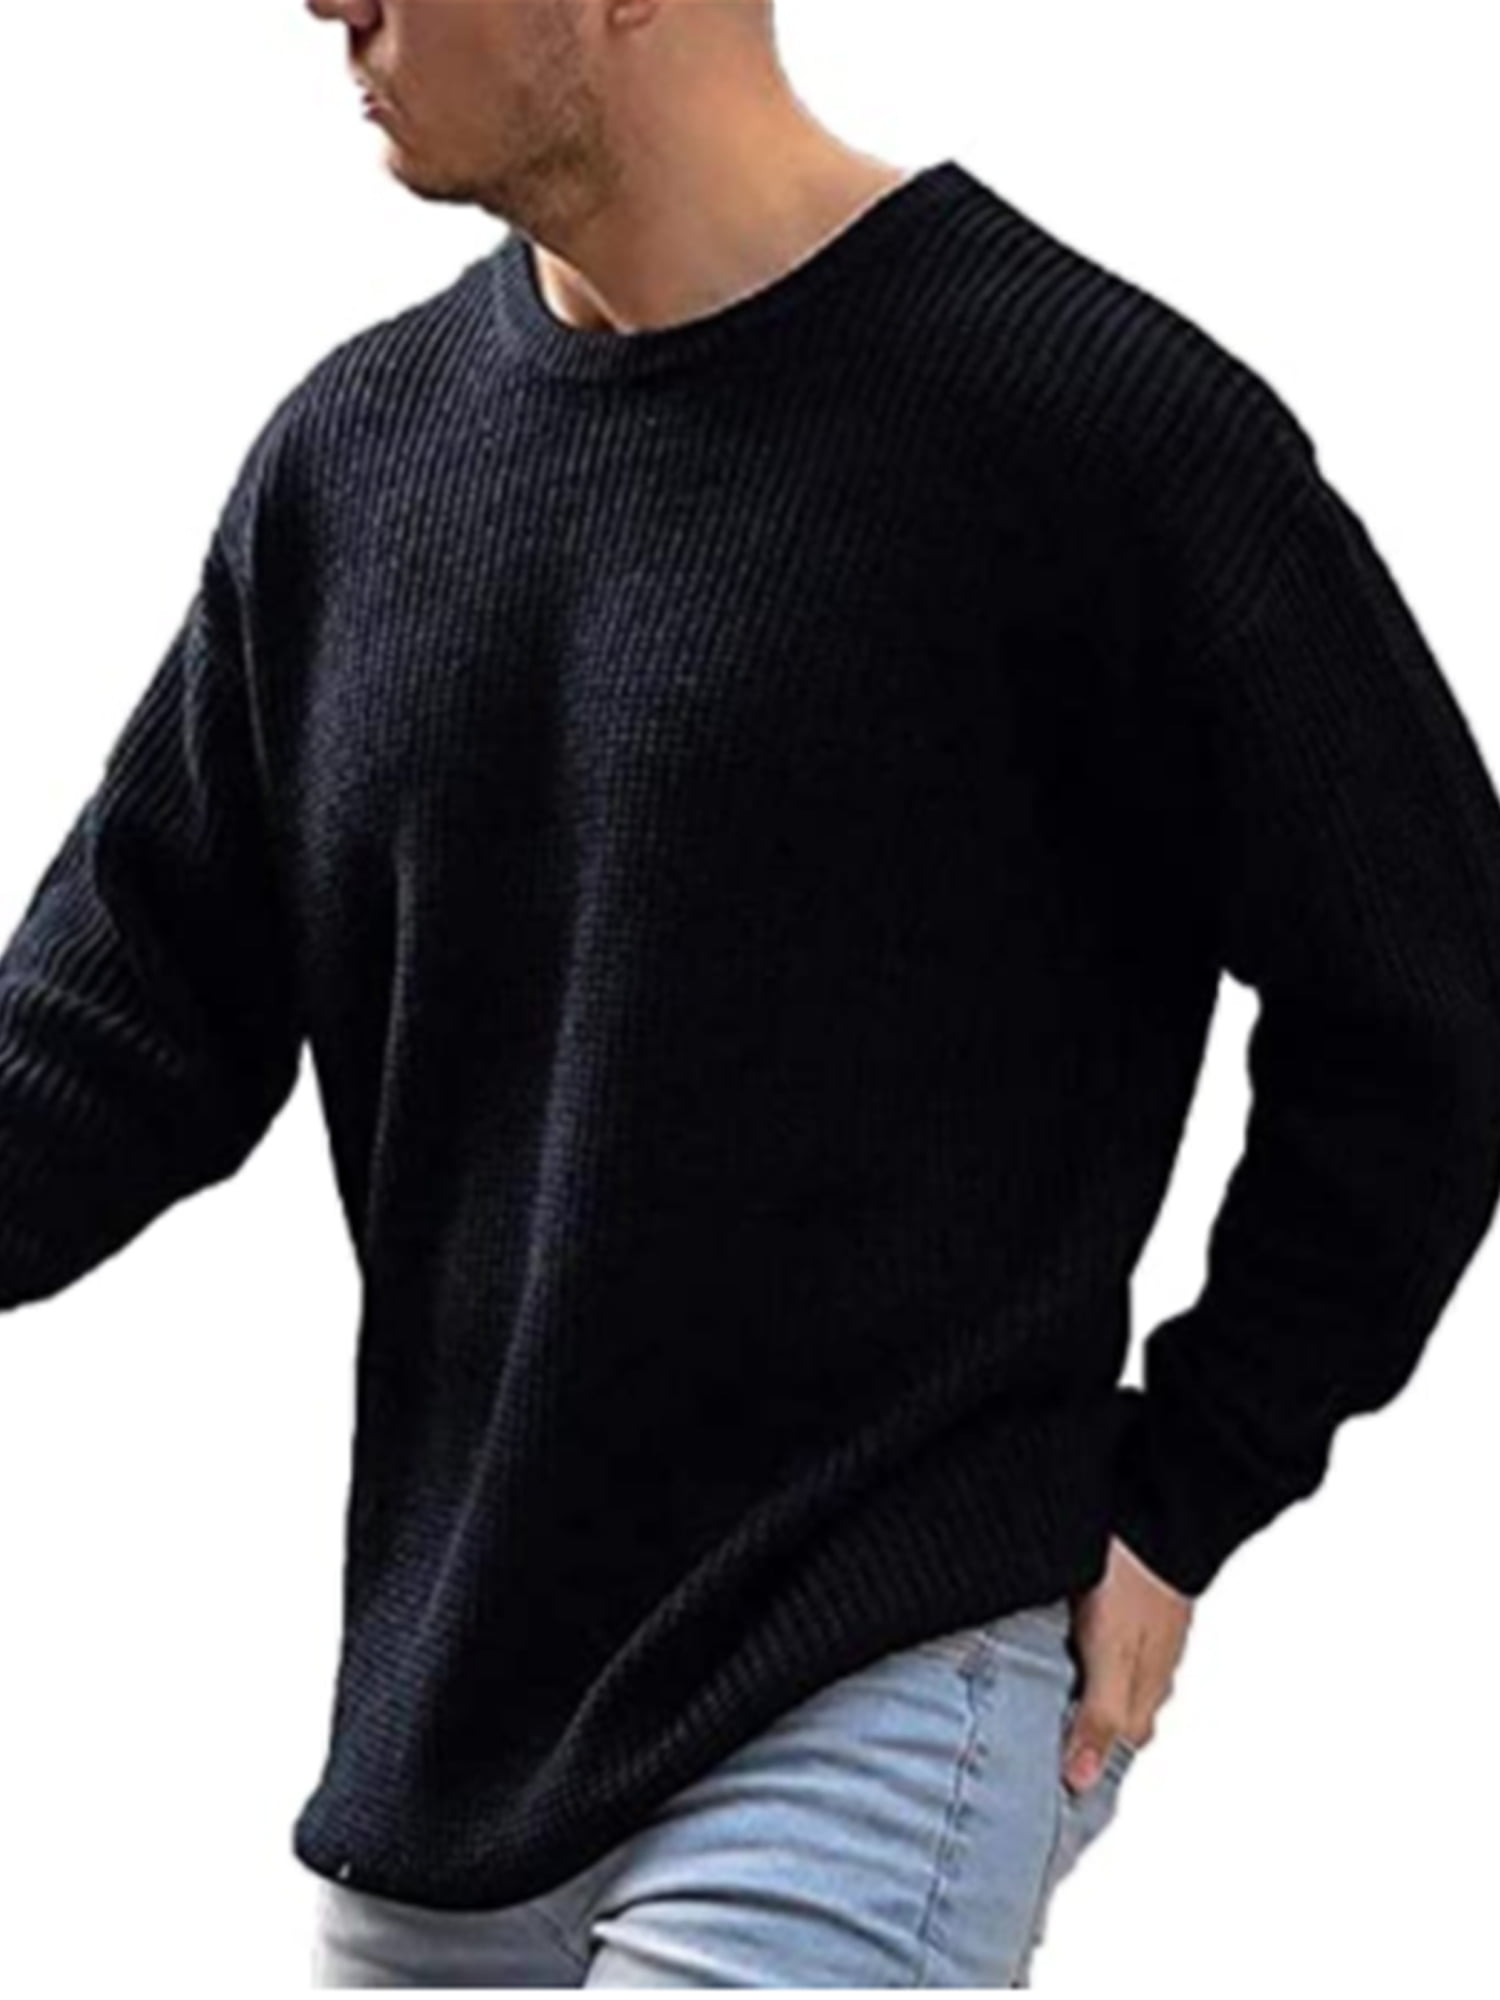 Thermal Pullover,Mens Casual Long Sleeve Zipper Irregular Hem Sweatershirt Top Blouse for Men Teen Boys